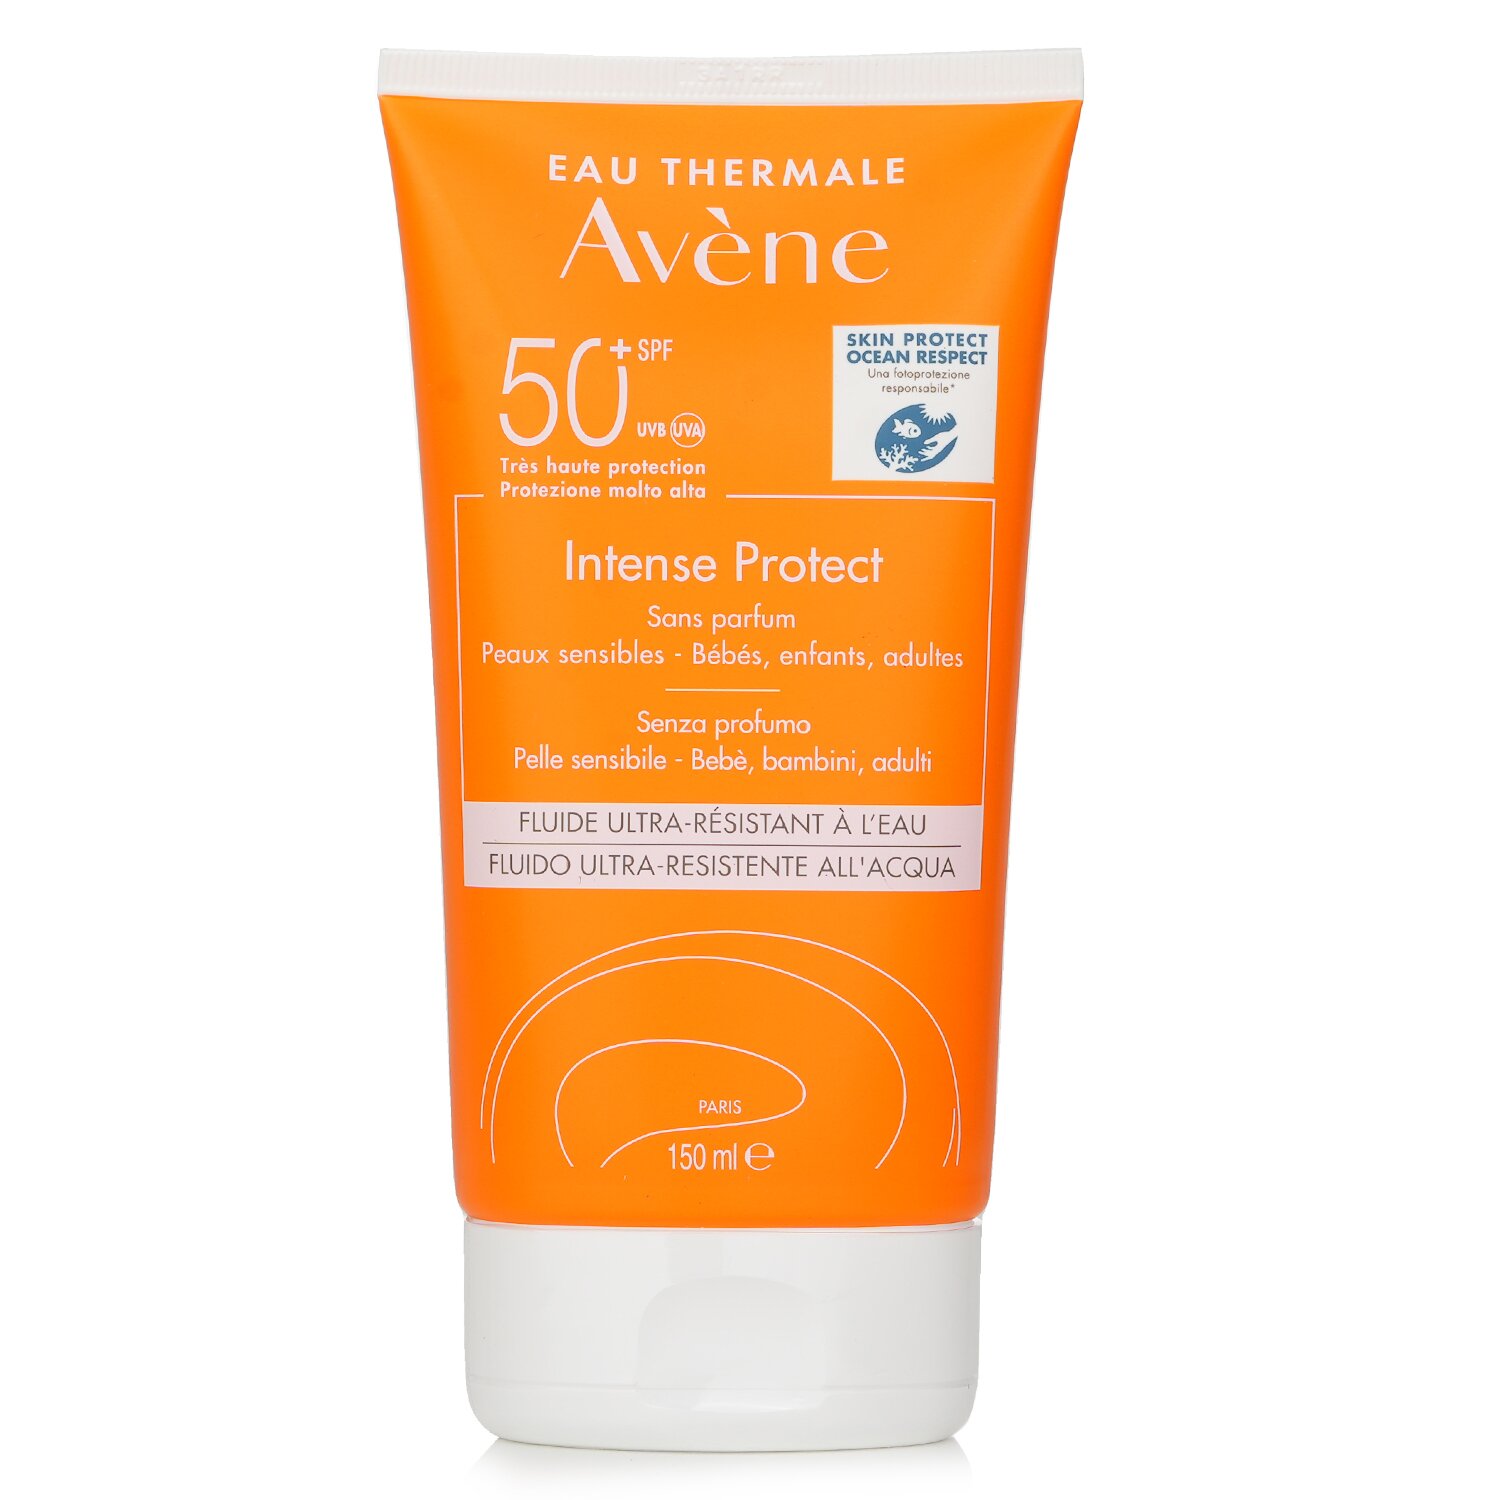 Avene Intense Protect SPF 50 (Για μωρά, παιδιά, ενήλικες) - Για ευαίσθητο δέρμα 150ml/5oz